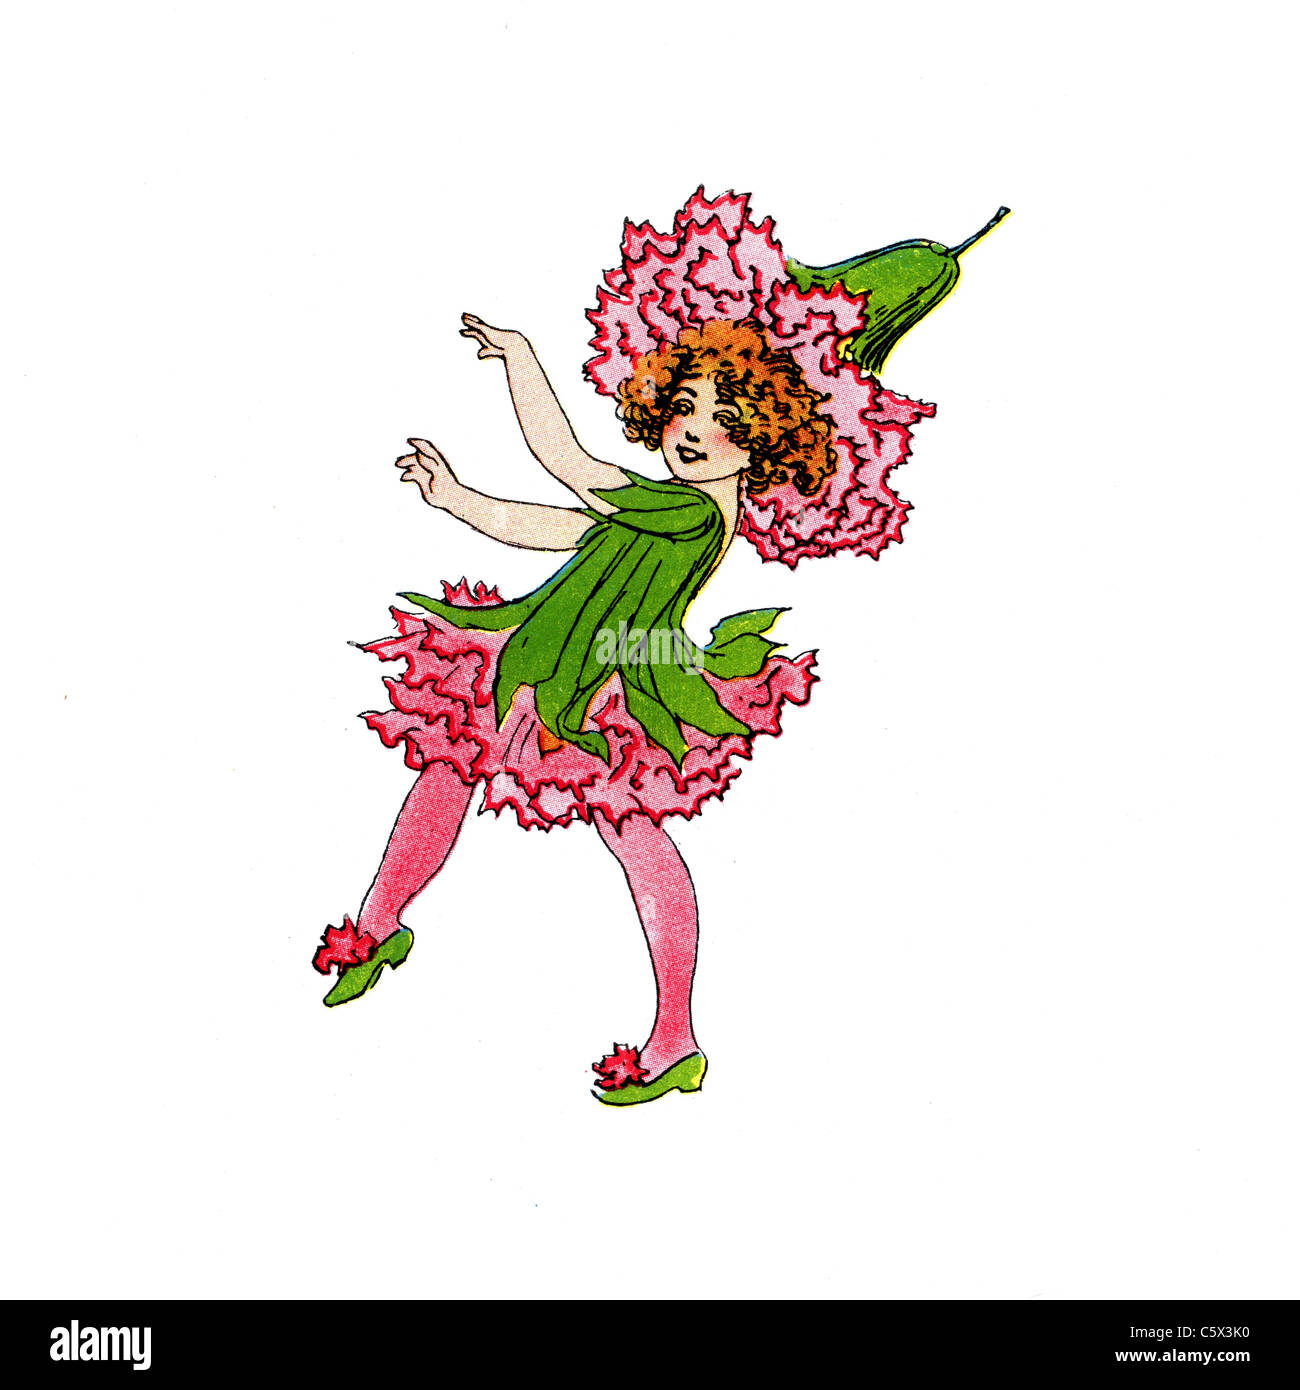 Garden Pink - Rose Carnation - Flower Child Illustration from an antiquarian book Stock Photo